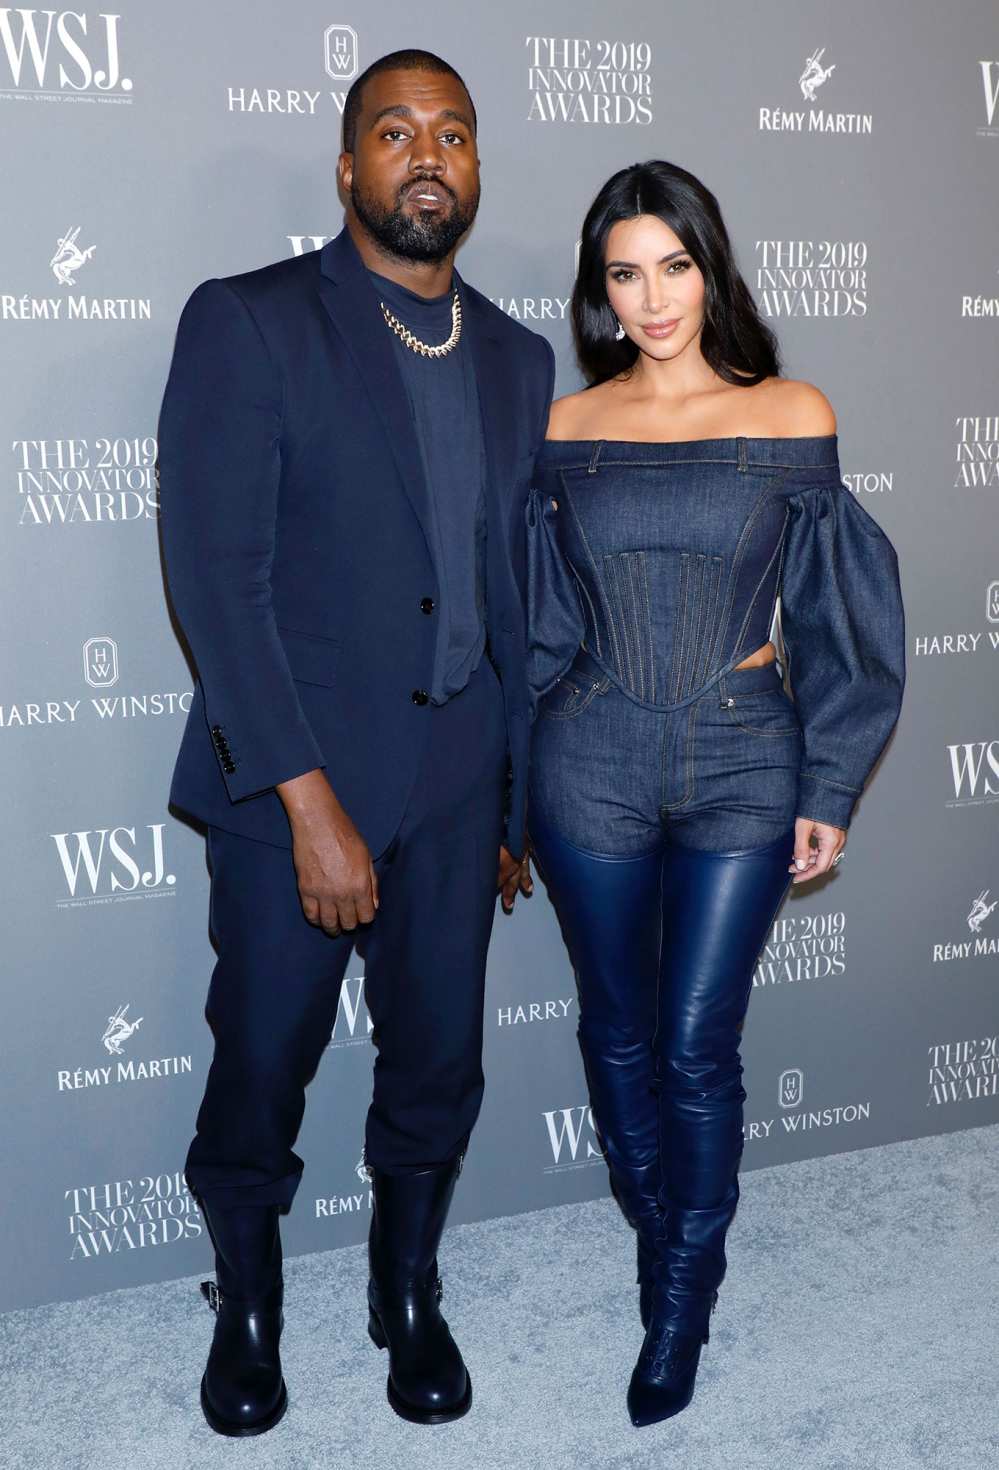 Kim Kardashian Shares Photos With Kanye West After Congratulating Joe Biden on Victory